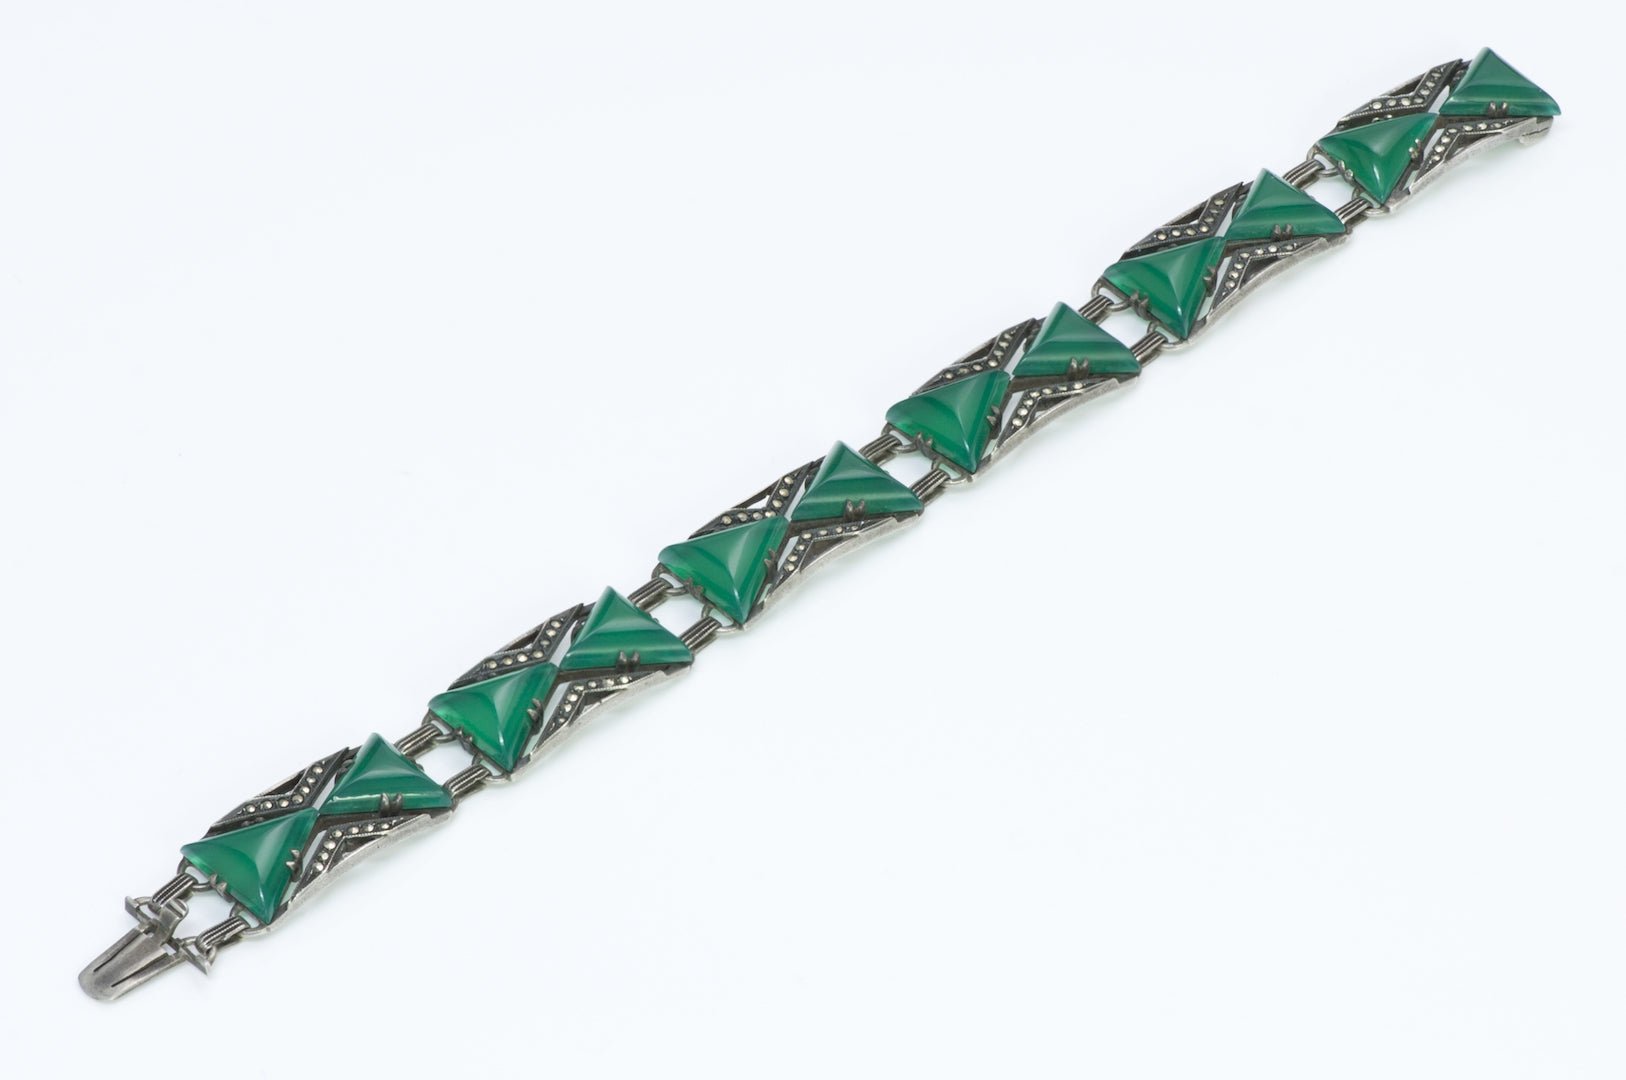 Art Deco Sterling Silver Onyx Marcasite Bracelet